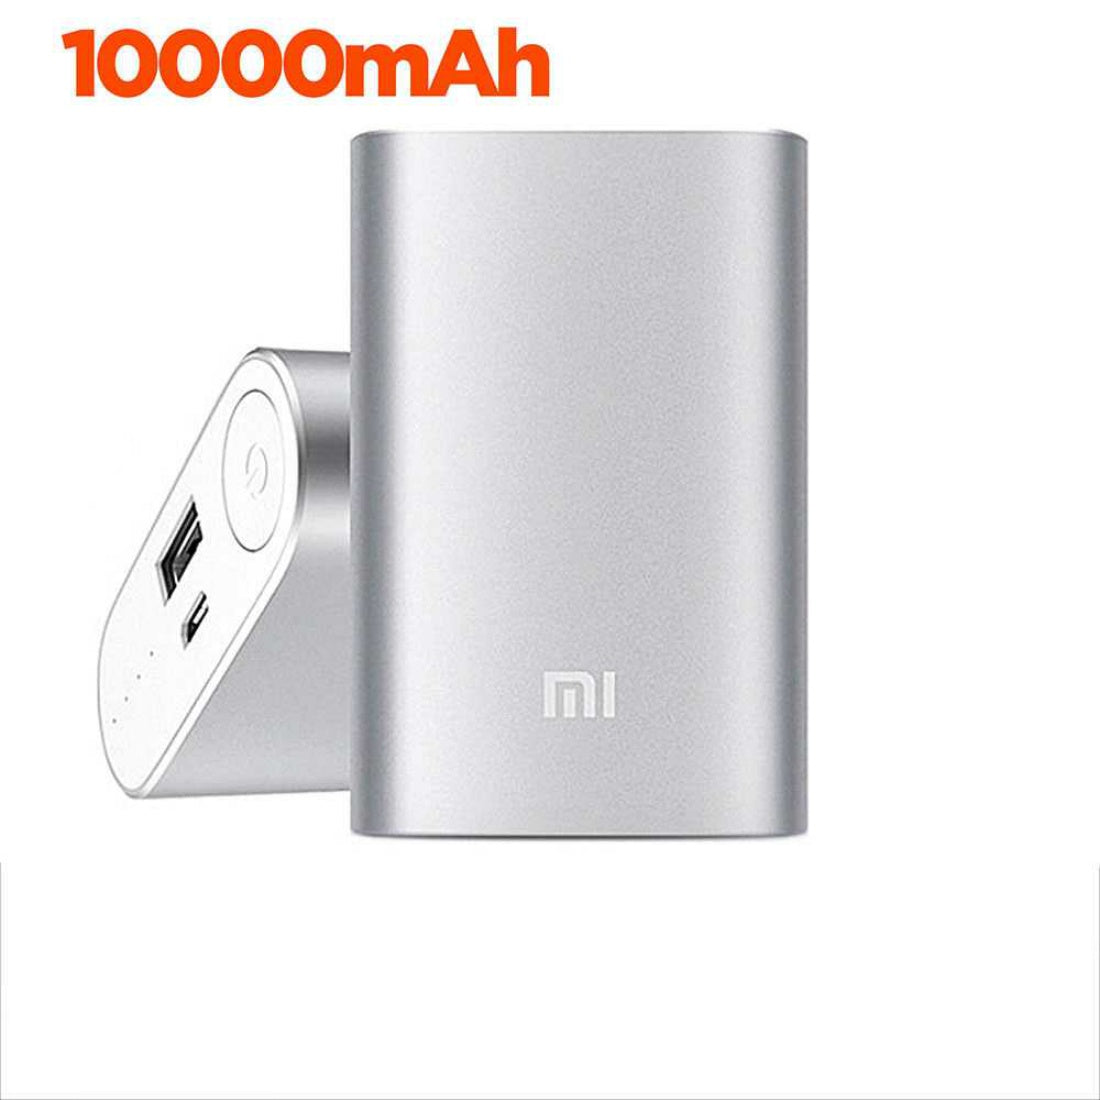 XIaomi 10000mAh Power Bank USB External Portable Battery Charger Silver